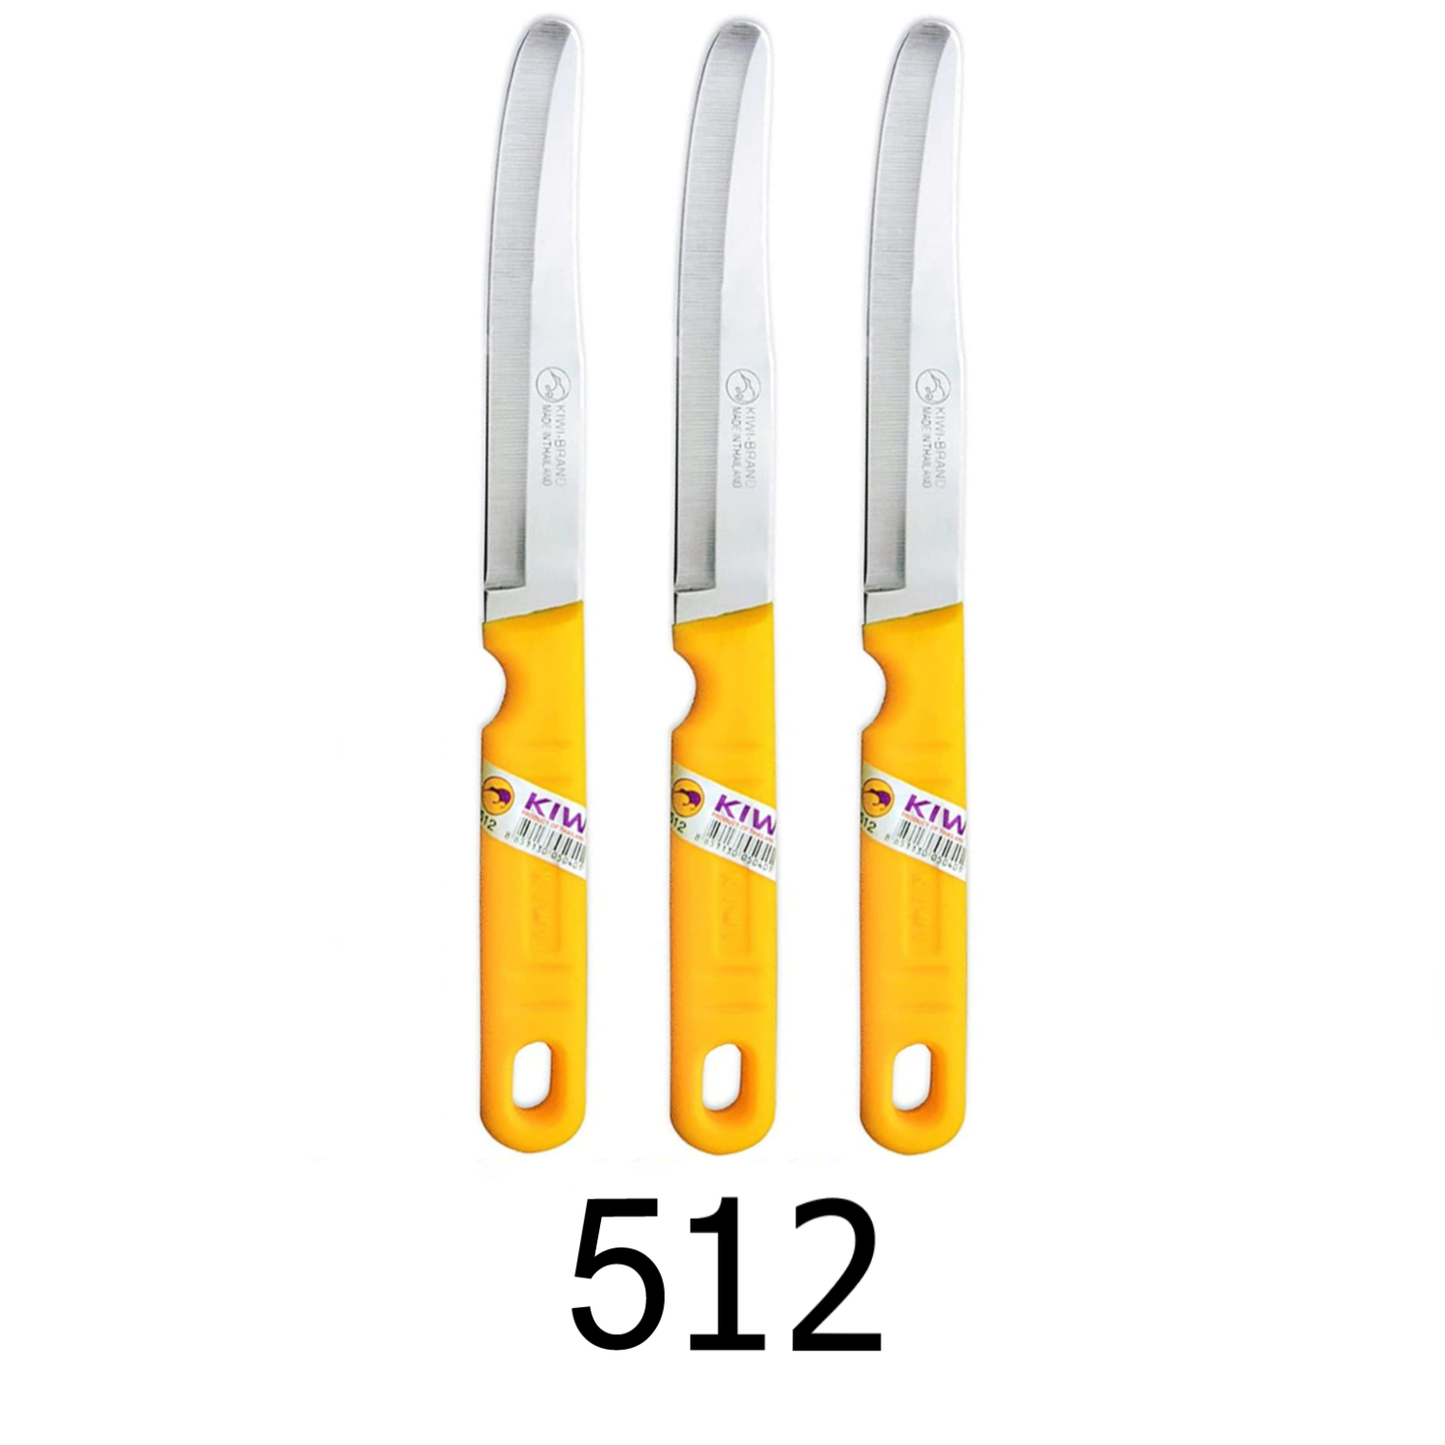 3 PC Kiwi Stainless Steel Kitchen Knife - 512